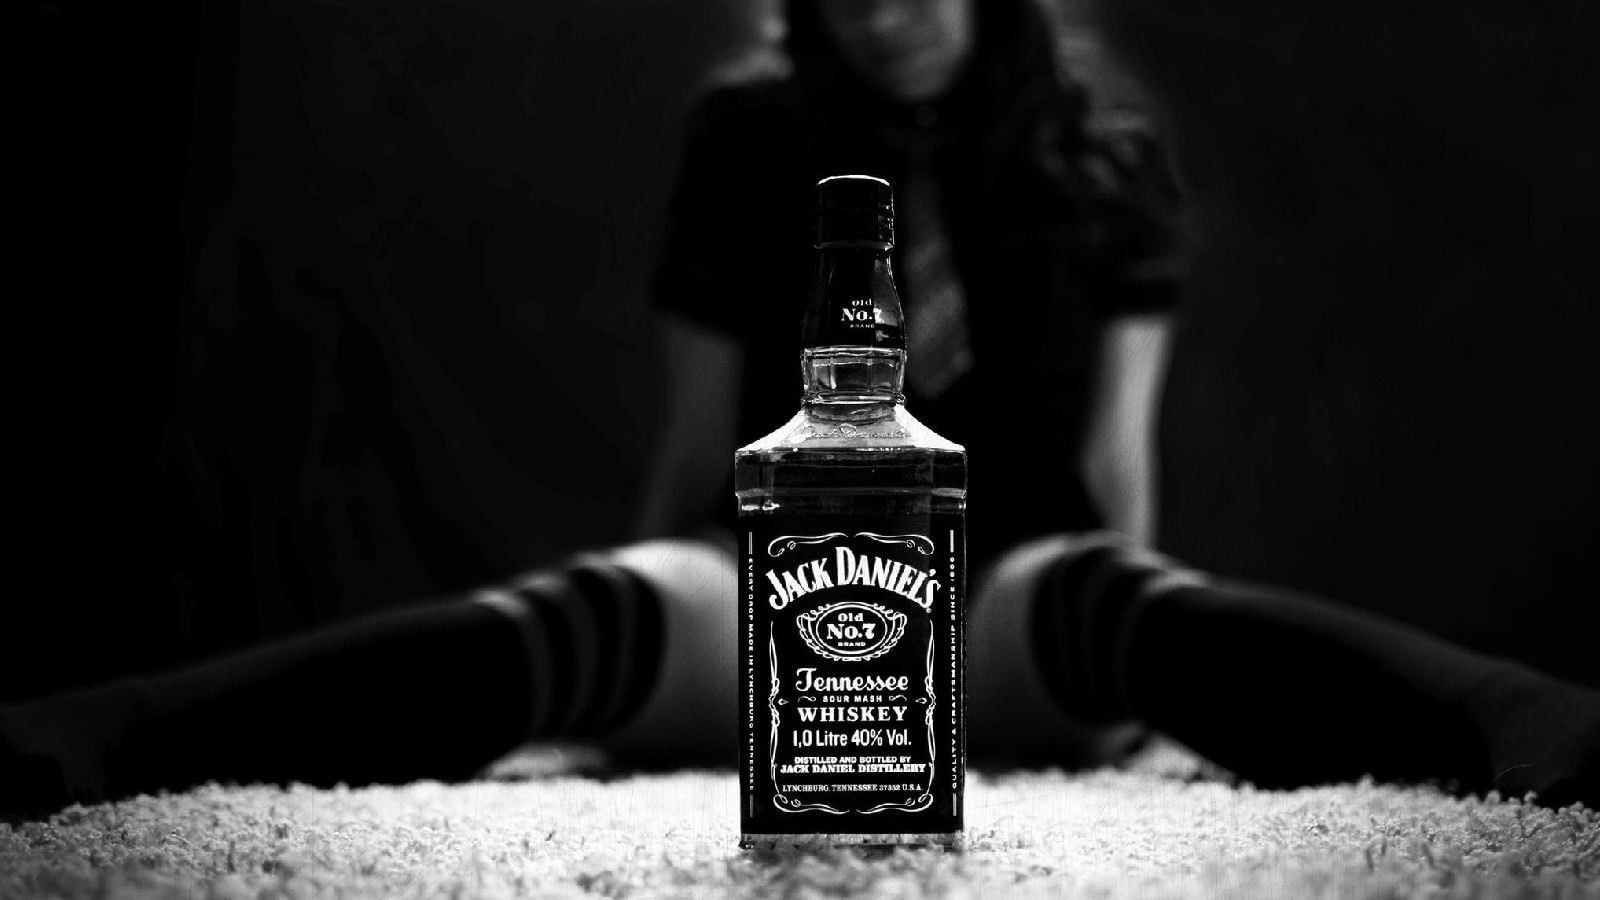 Jack Daniel's whisky bottle, white, black, alcohol, close-up